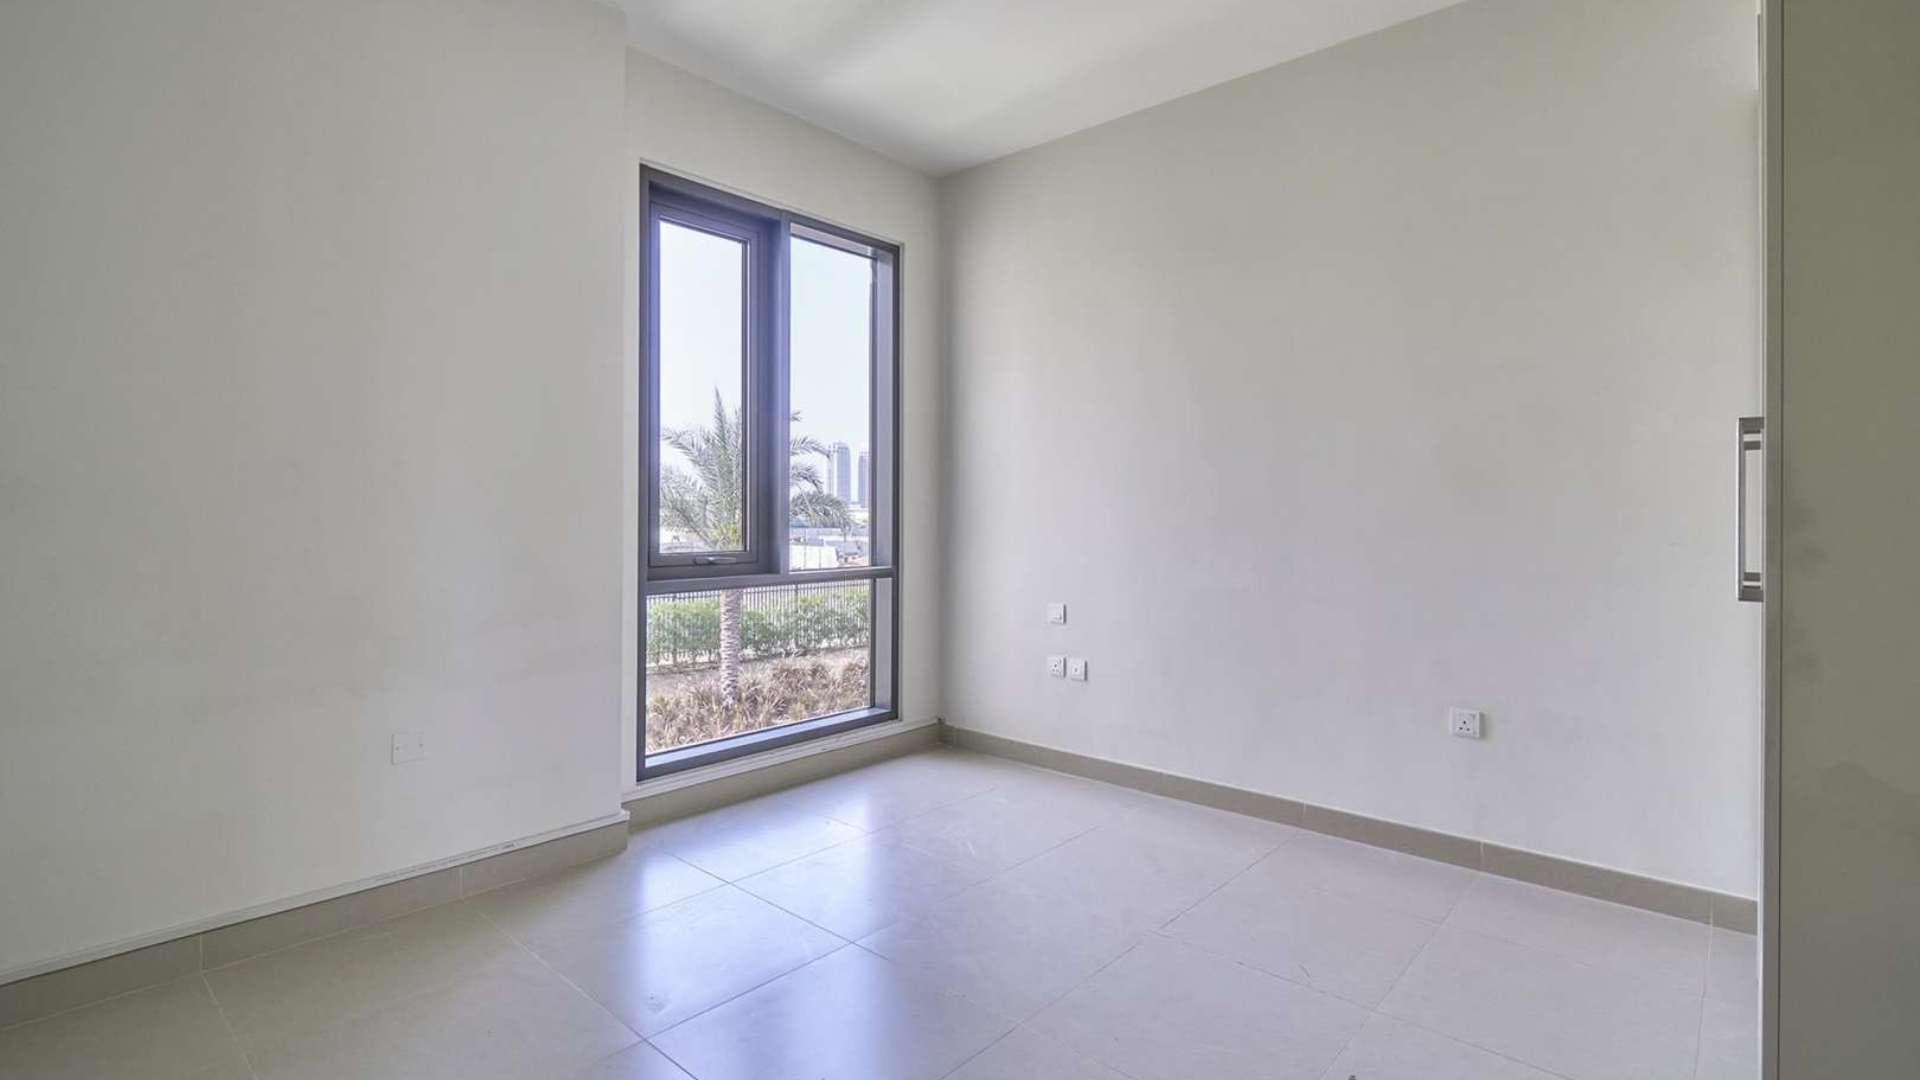 4 Bedroom Villa For Rent Maple At Dubai Hills Estate Lp37569 2e4274e407700c00.jpg